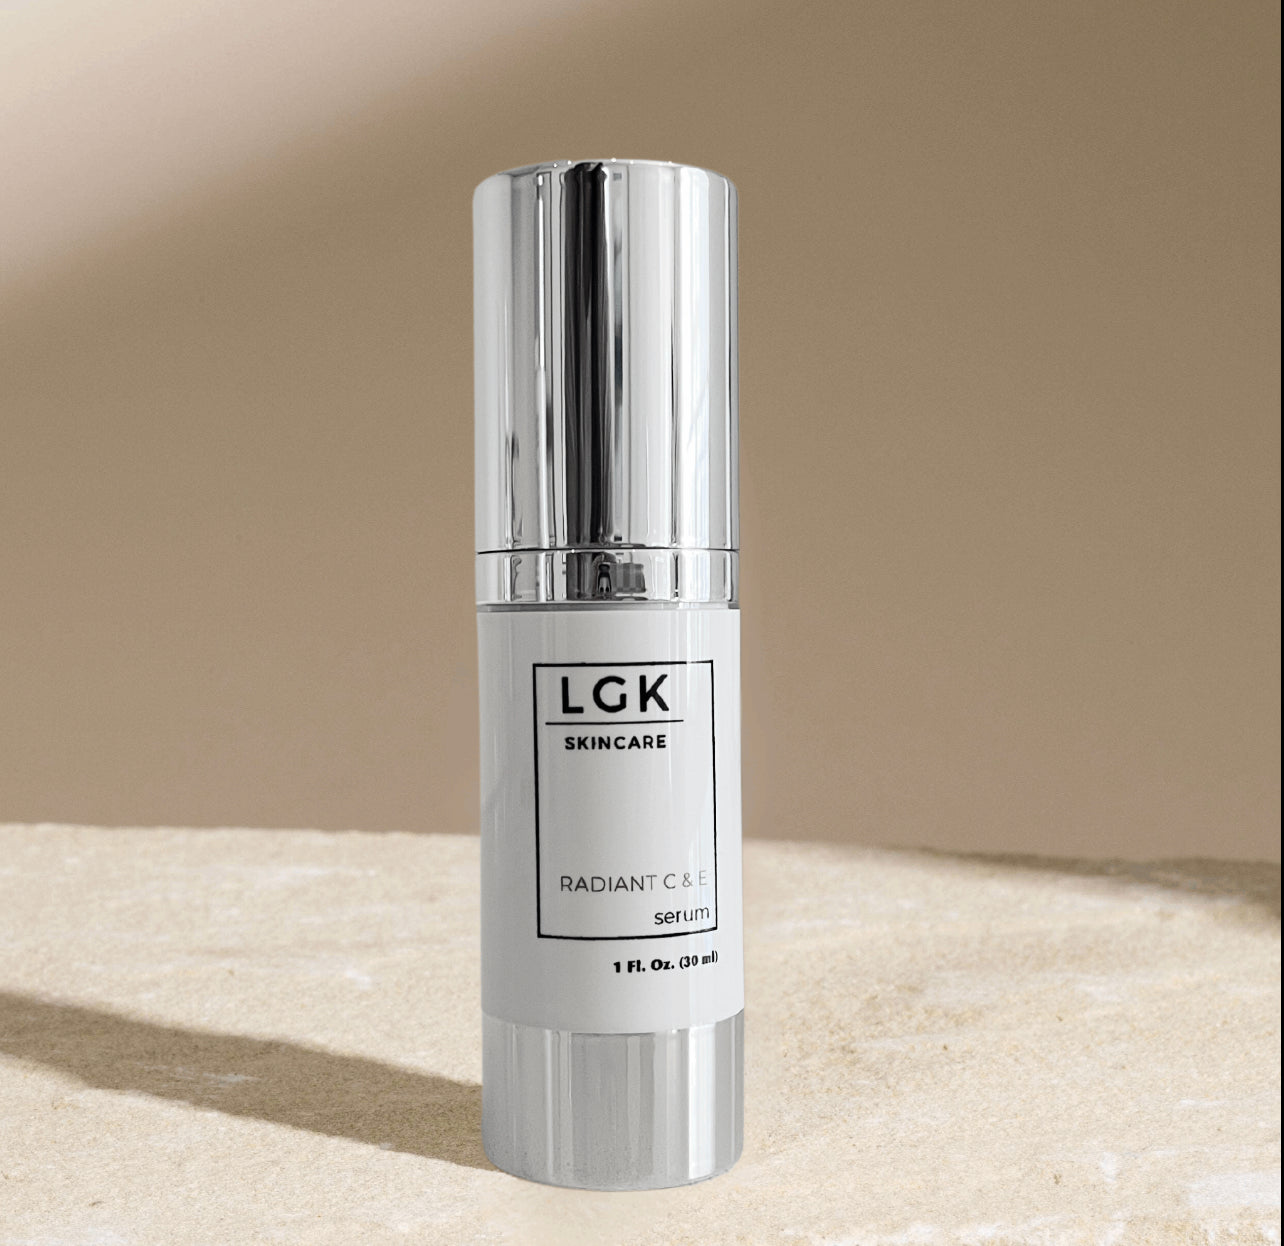 Radiant C&E serum LGK Skincare